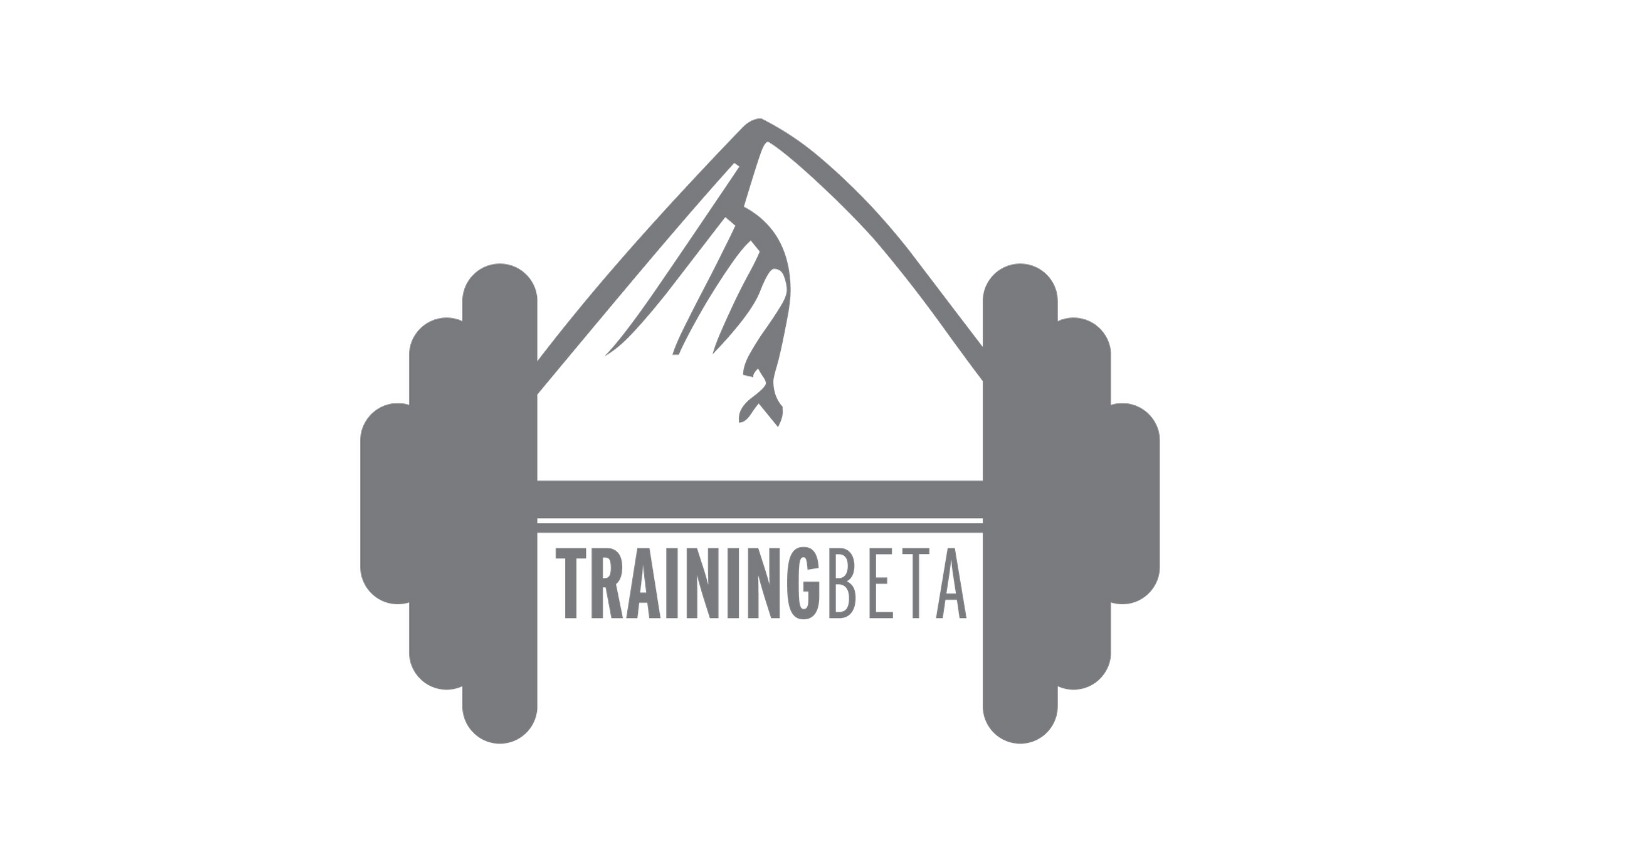 TrainingBeta: Rock Climbing Training Blog, Podcast, and Programs